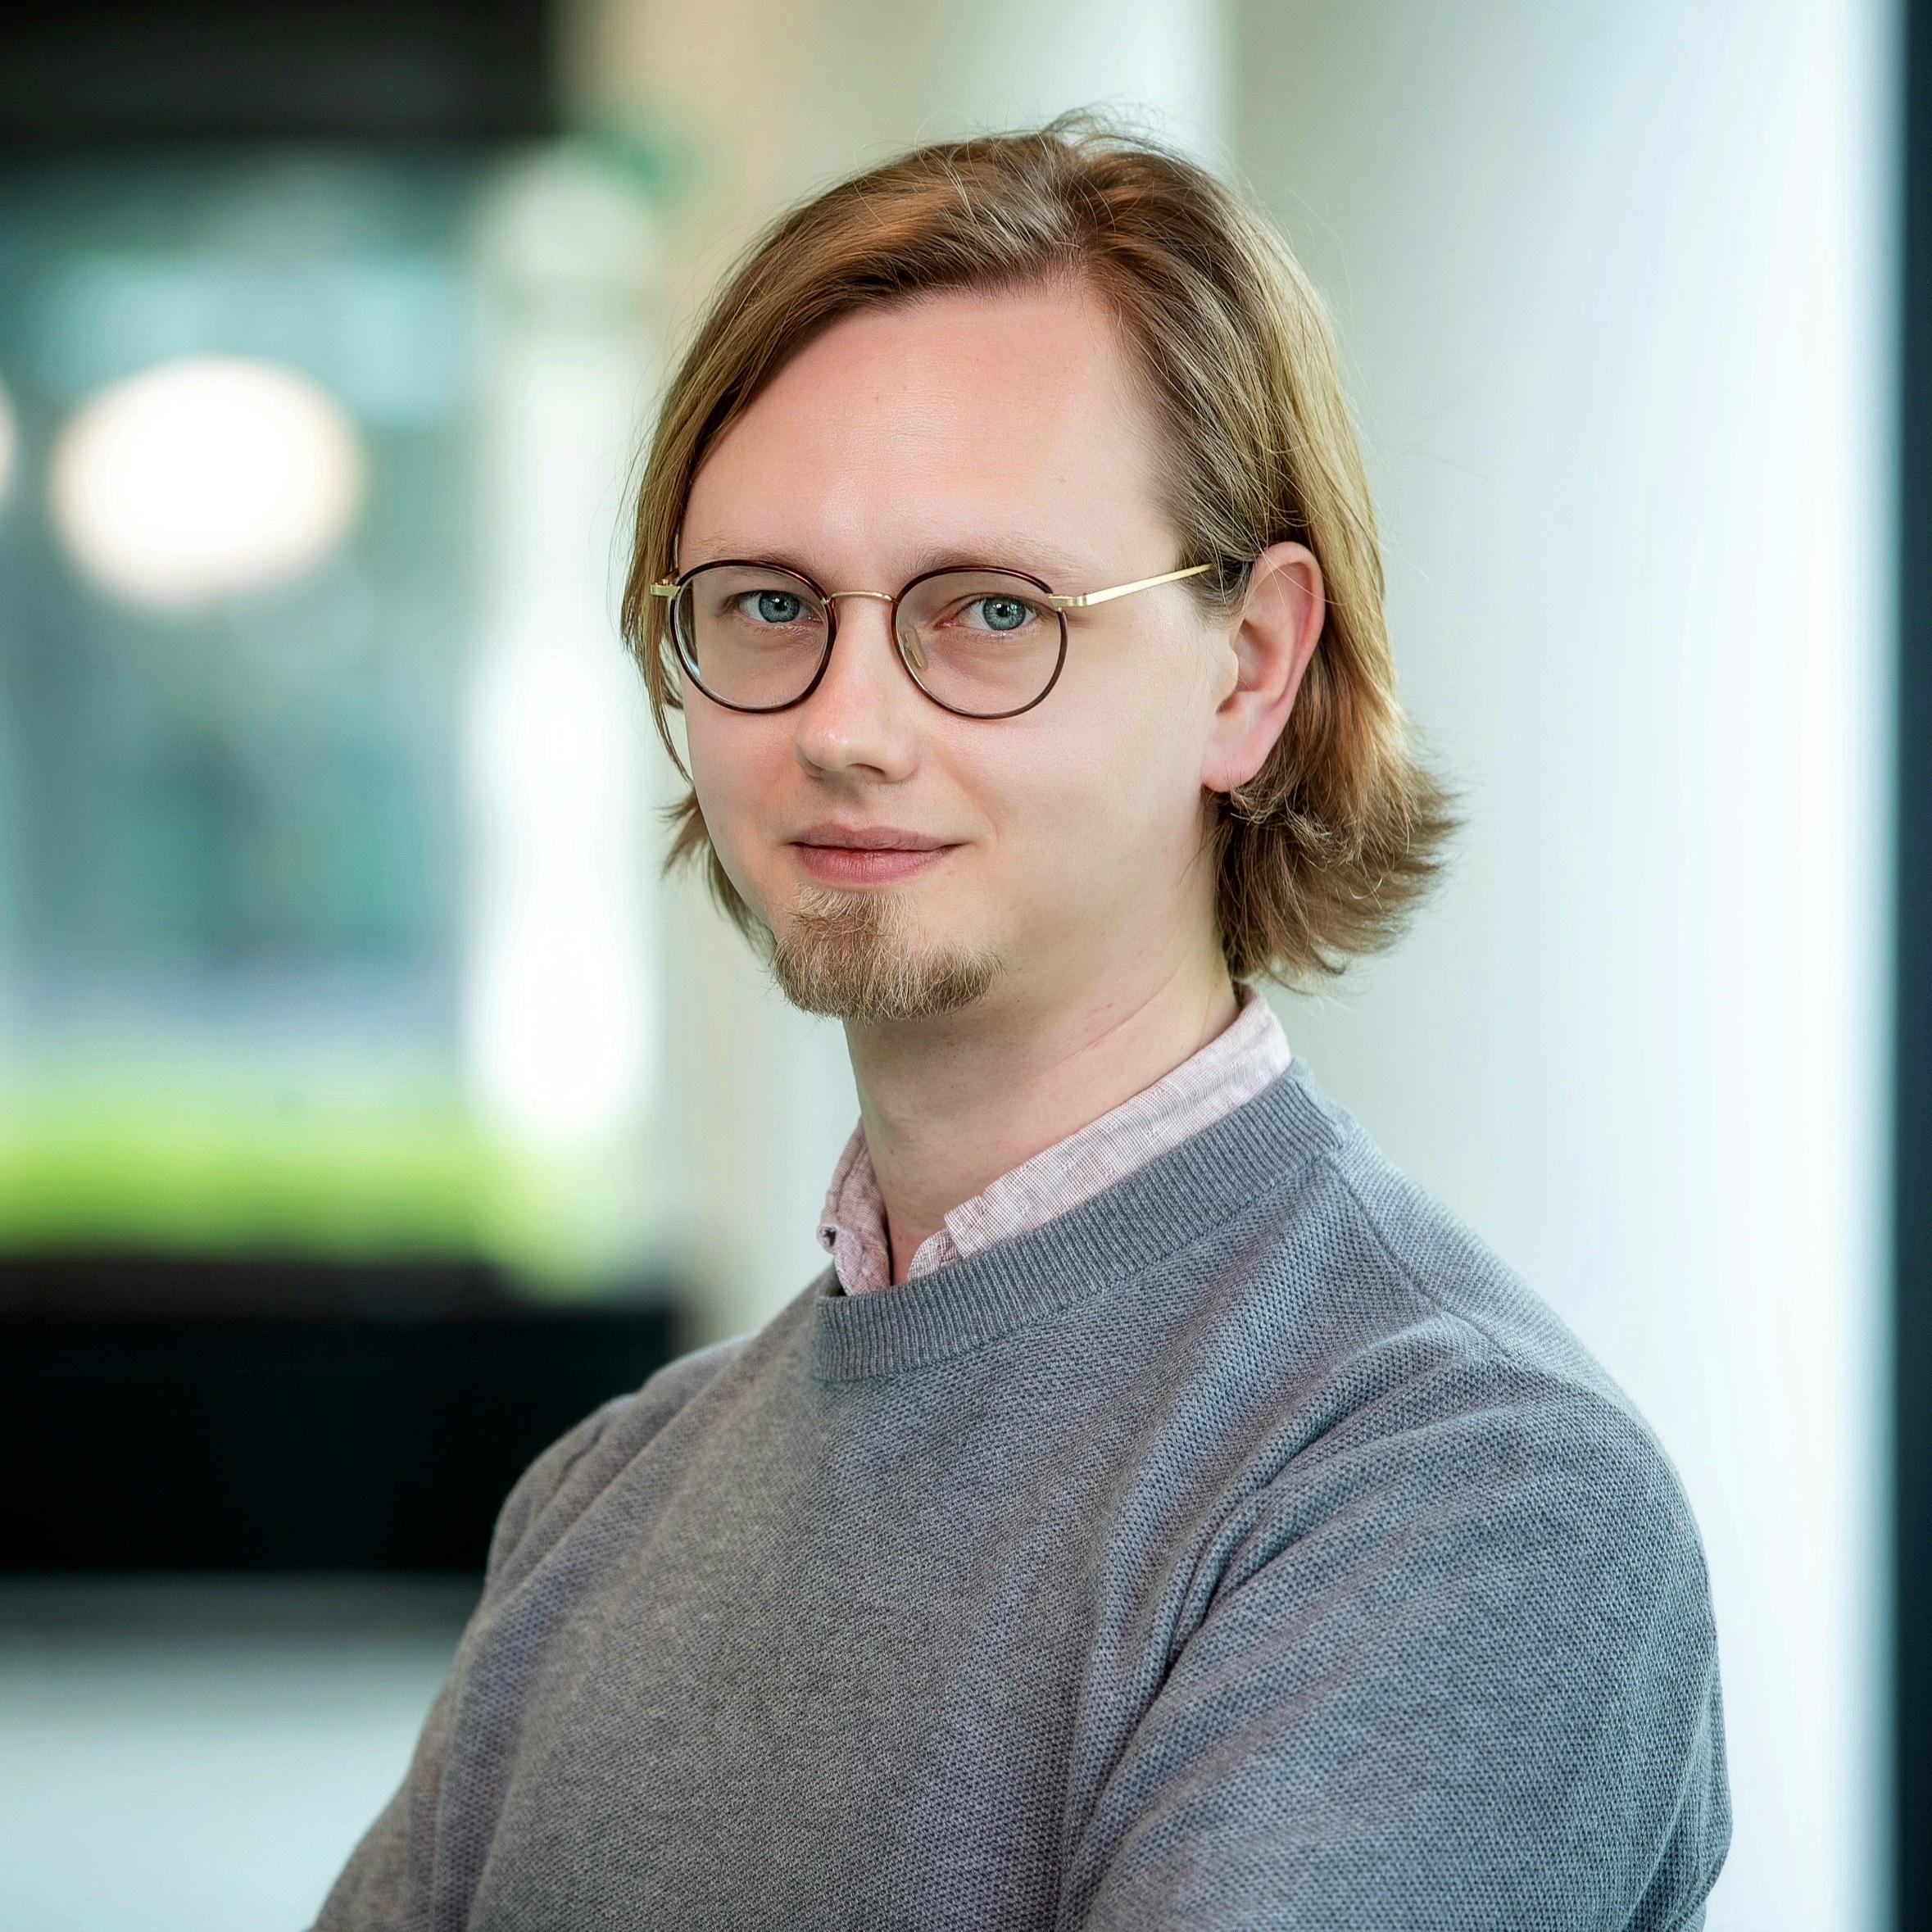 Marek Niedziela, Data & Technology expert at Discai